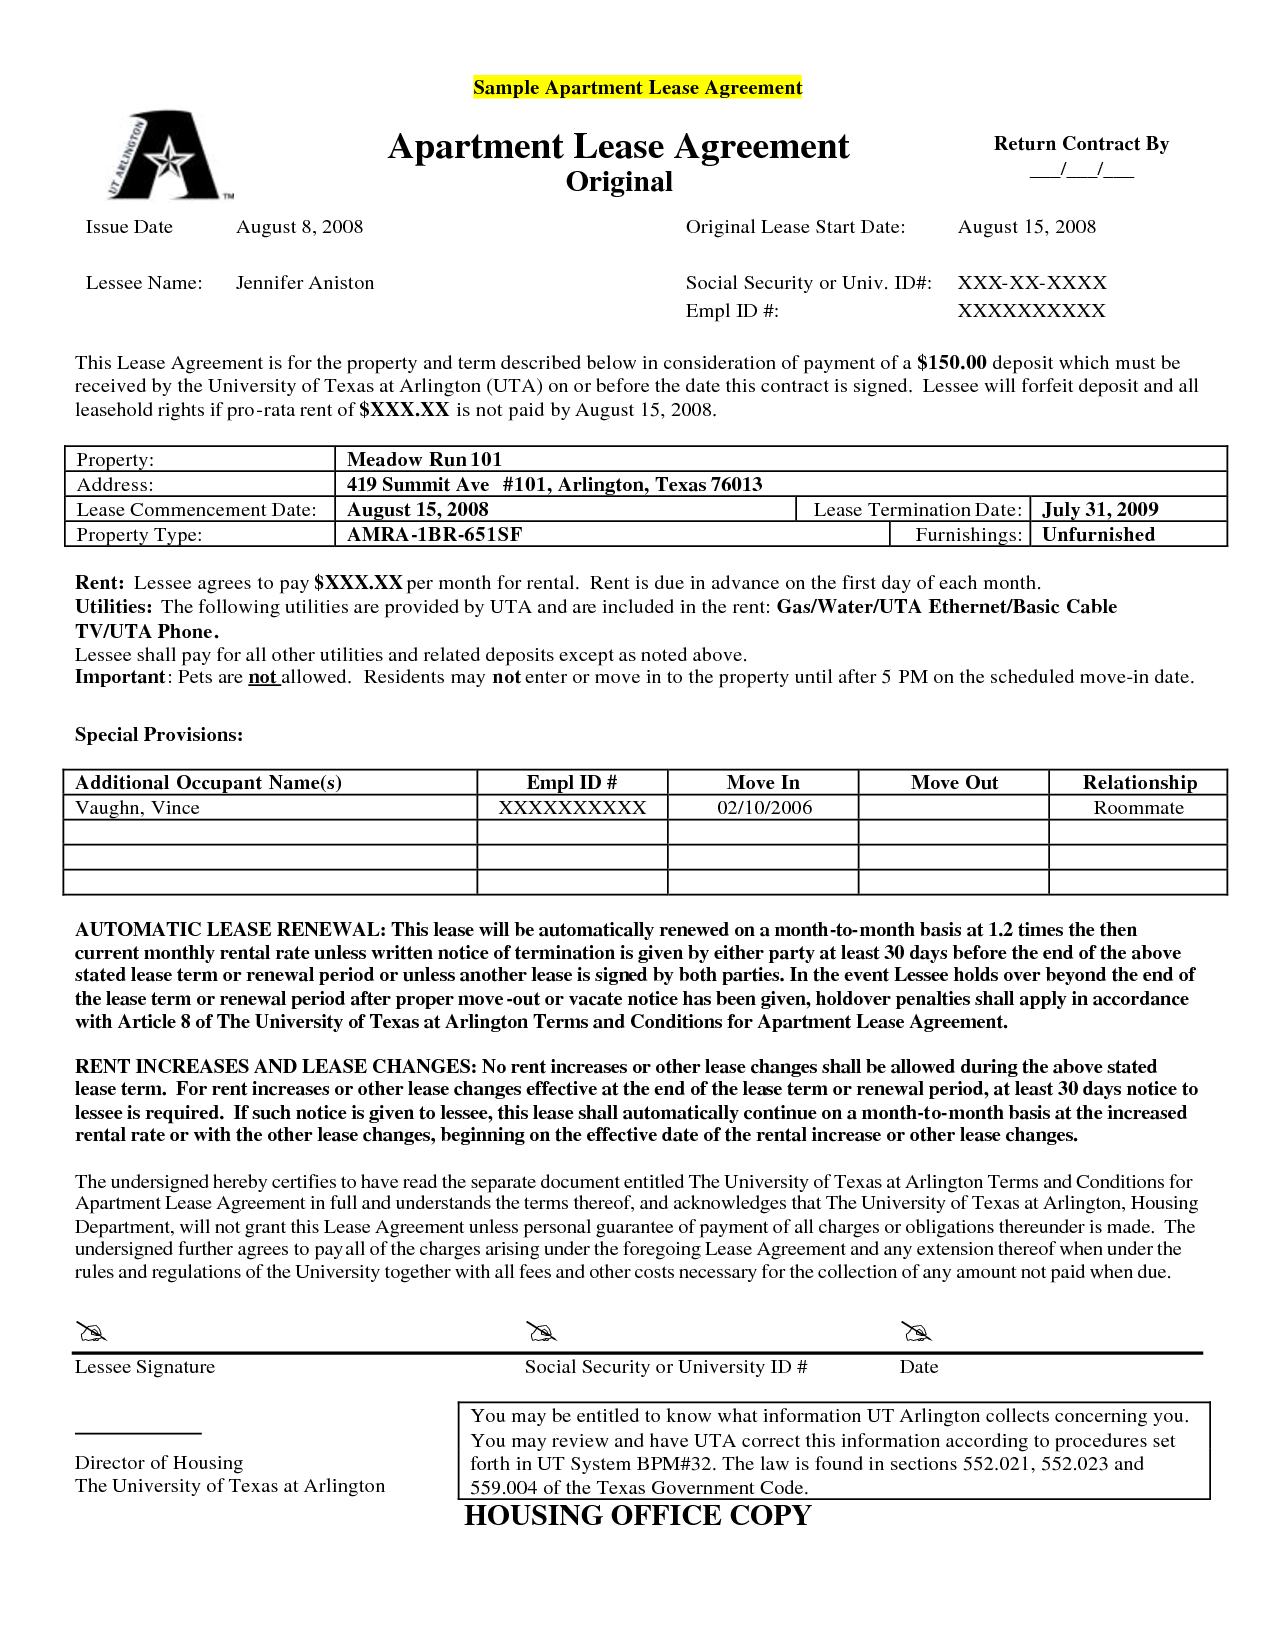 Sample apartment lease agreement pdf doc sample